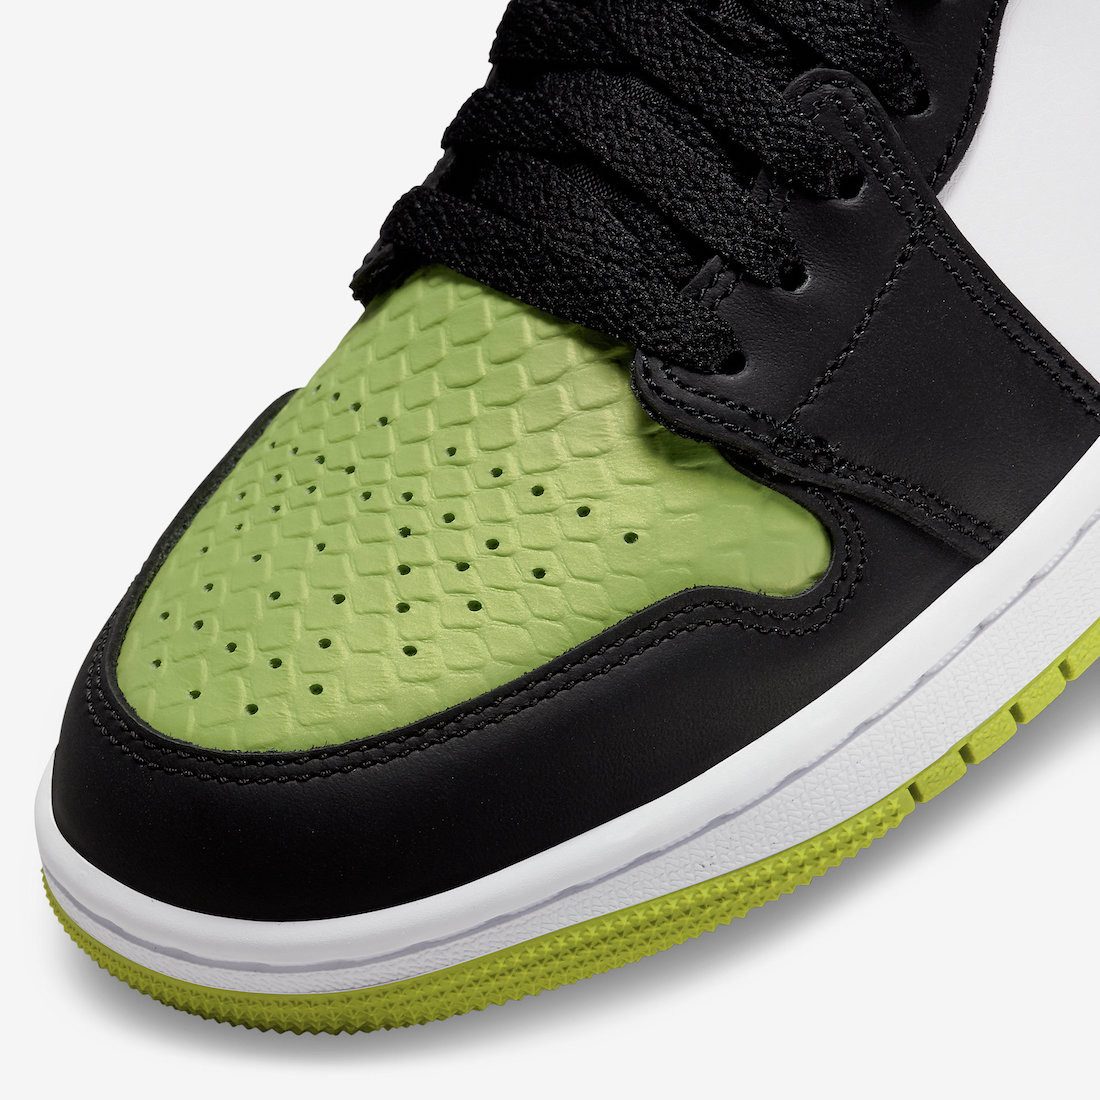 Air Jordan 1 Low Vivid Green Snakeskin DX4446-301 Release Date